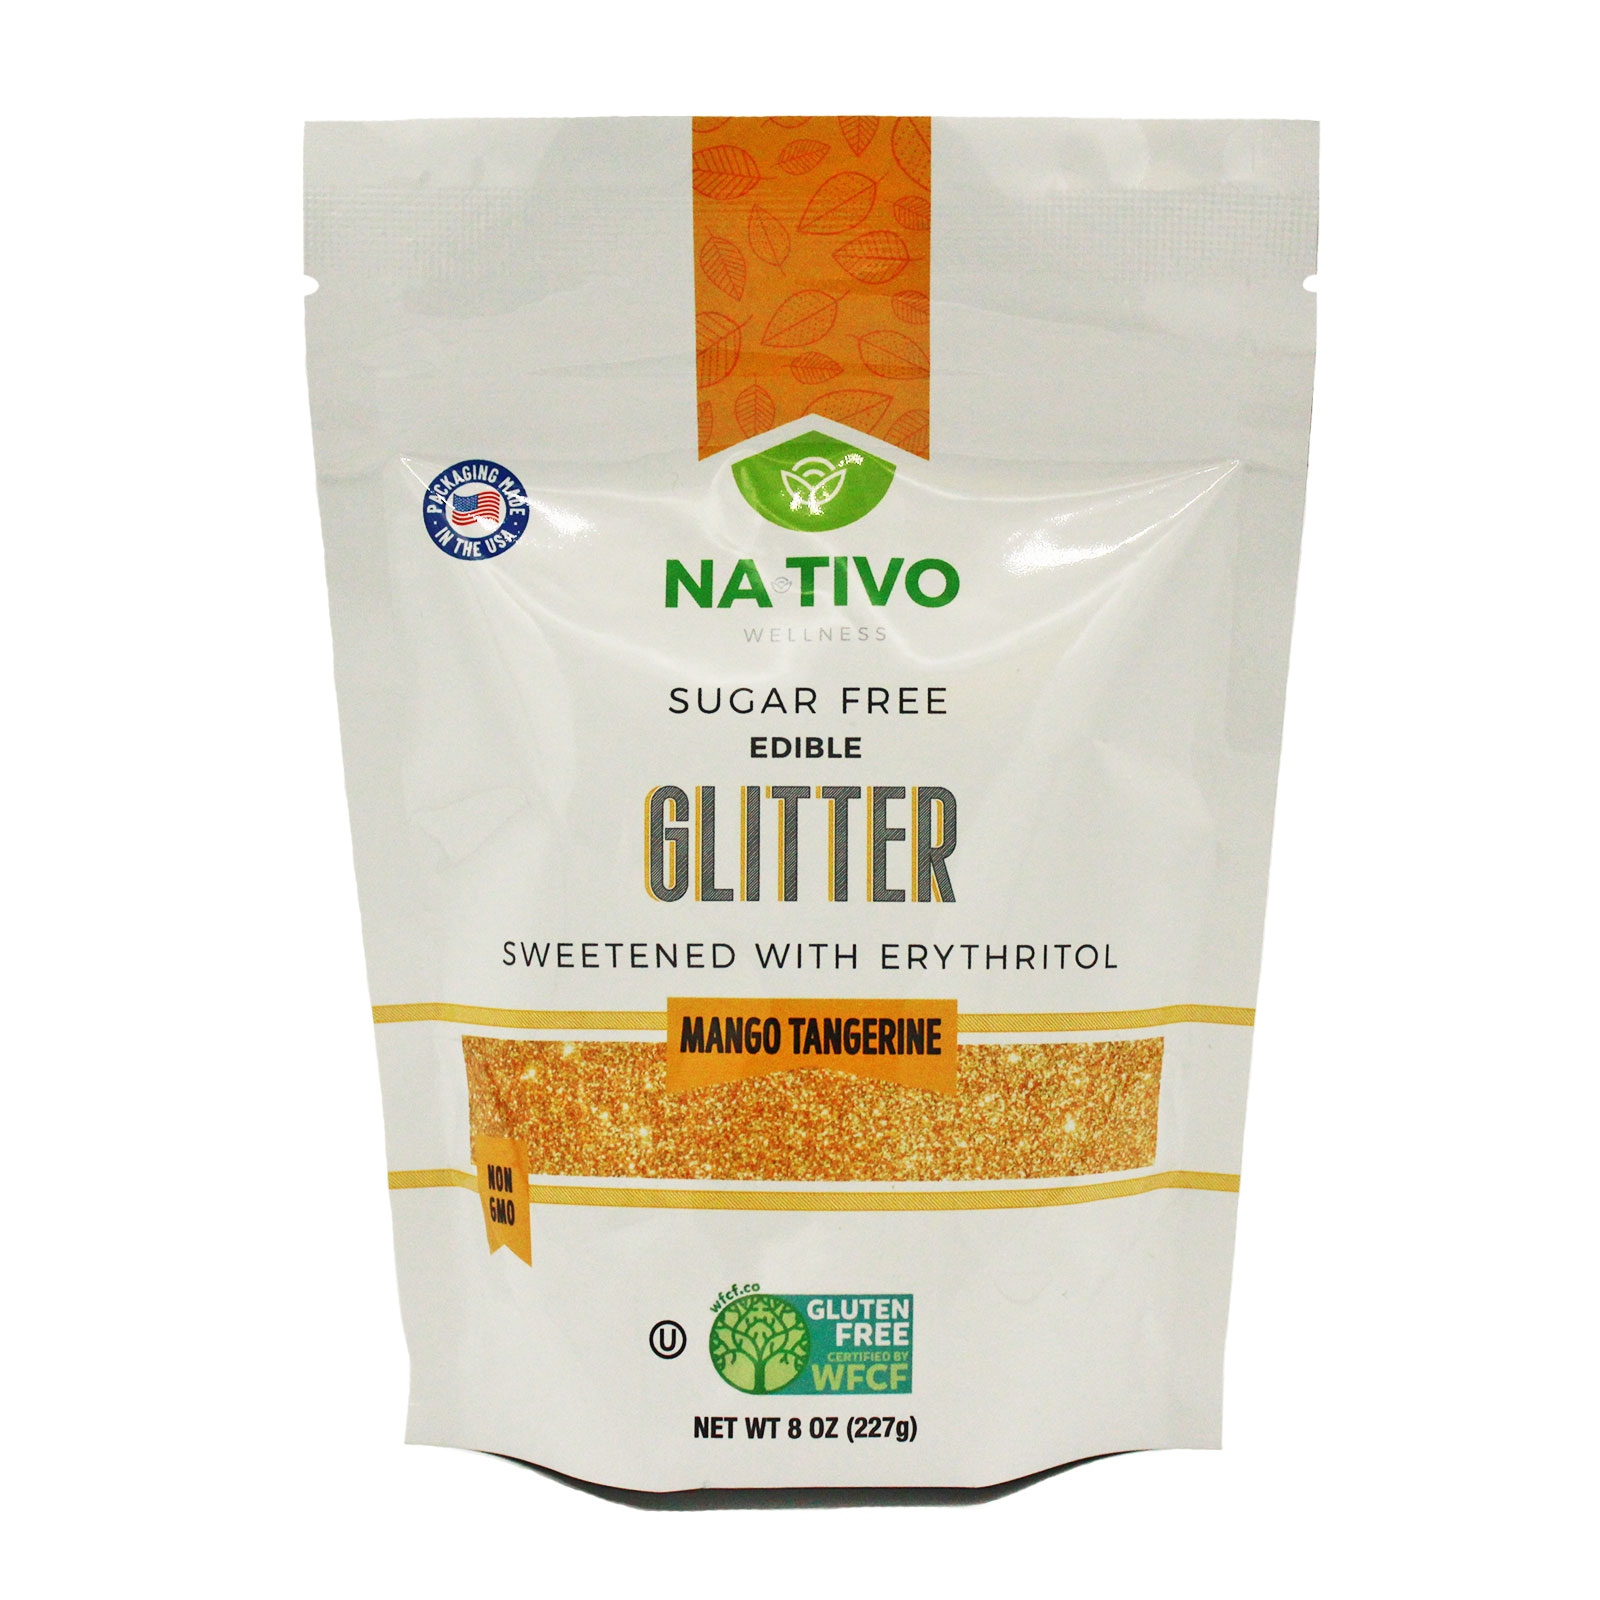 NaTivo Sugar Free Edible Glitter Mango Tangerine 12 units per case 8.0 oz